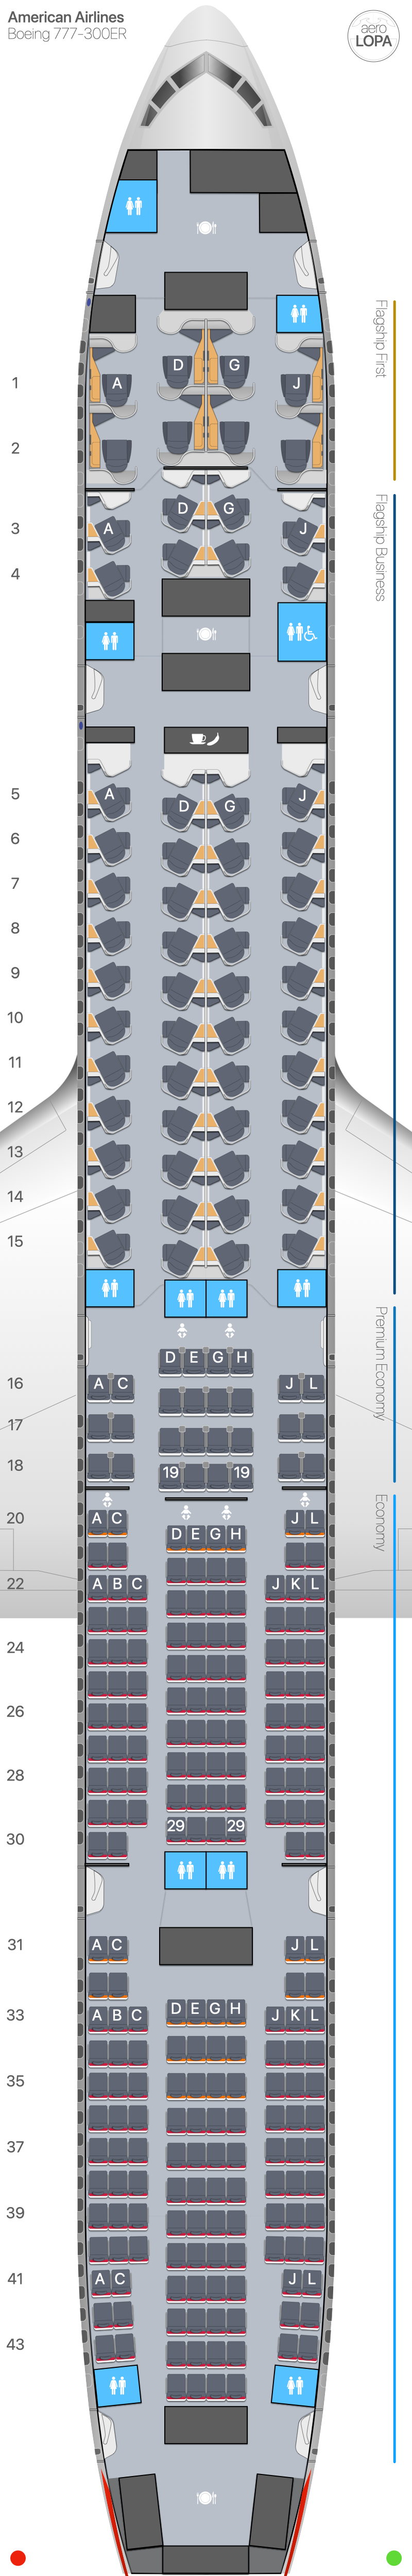 AA Boeing 777-300ER - aeroLOPA | Detailed aircraft seat plans